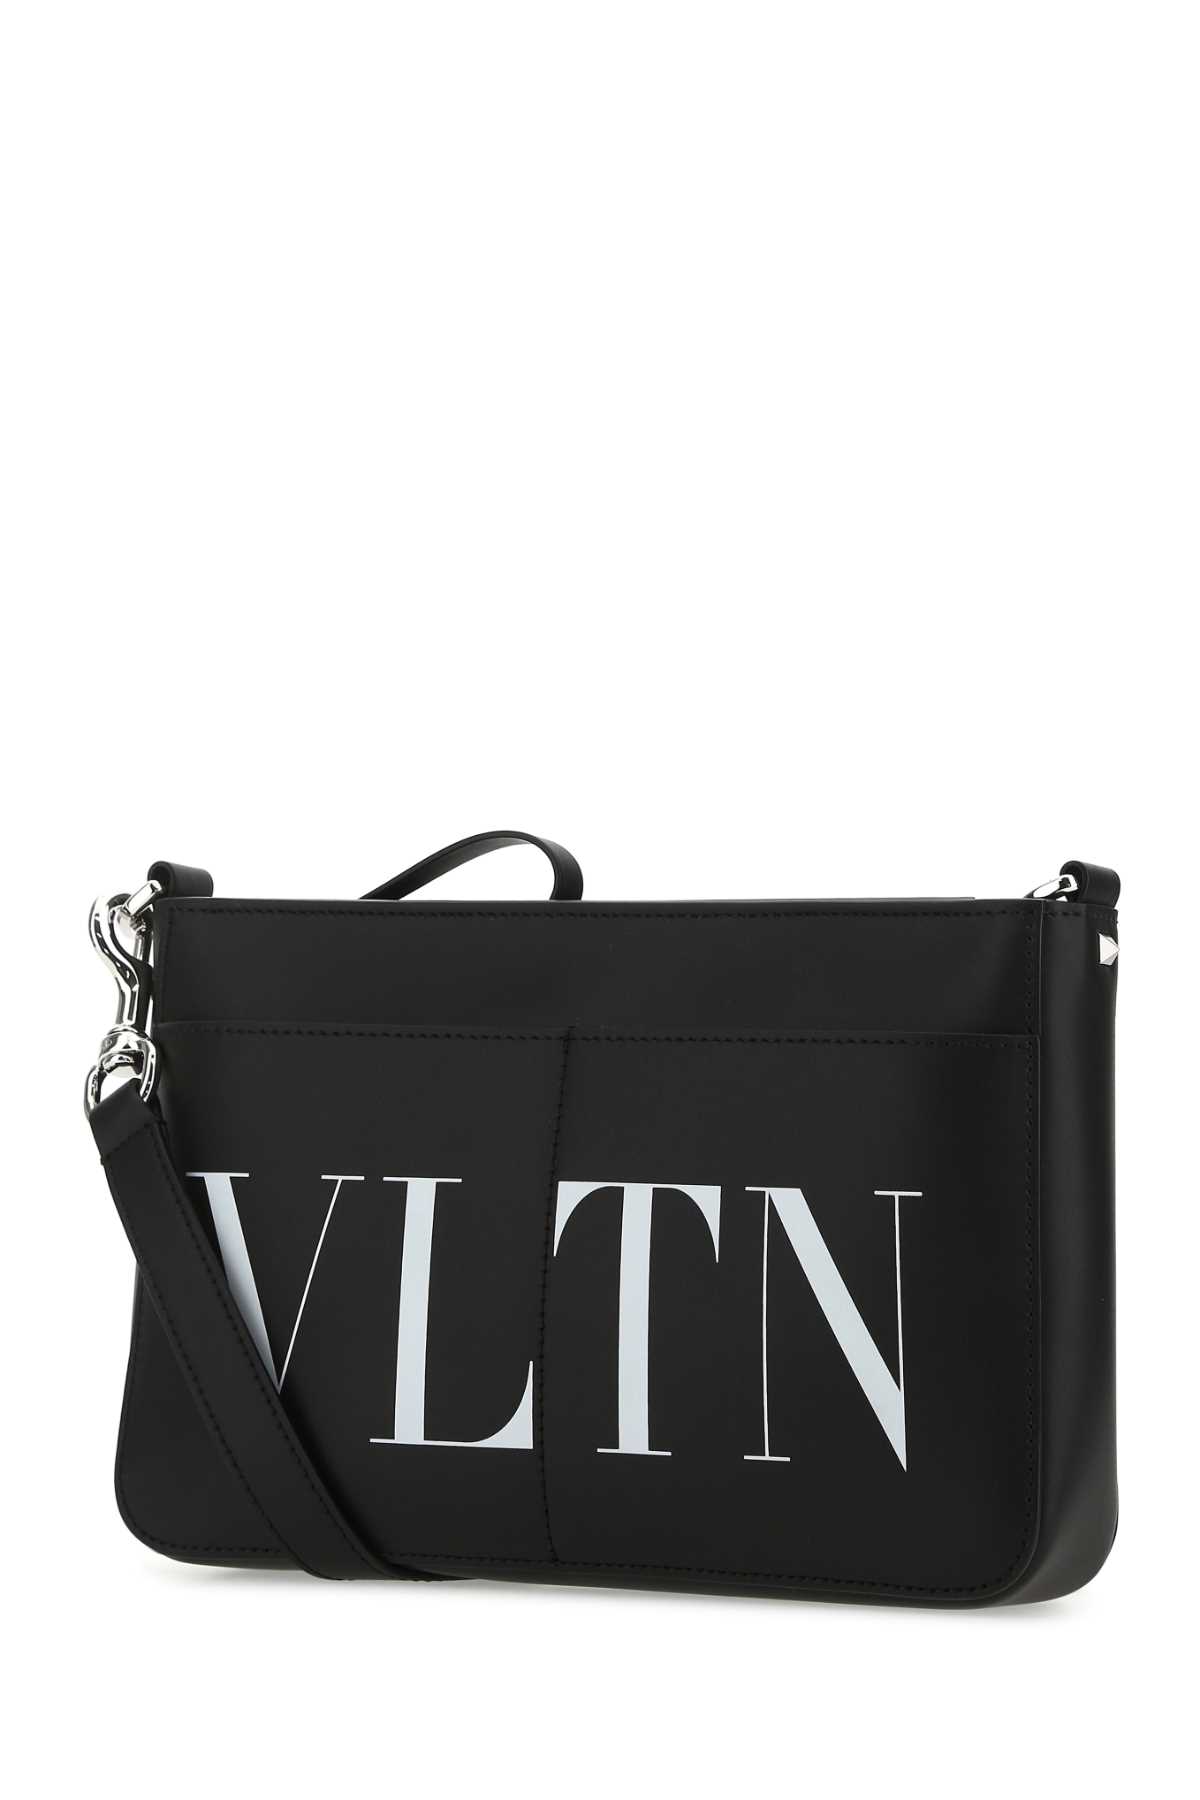 Valentino Garavani Black Leather Crossbody Bag In Nerbia